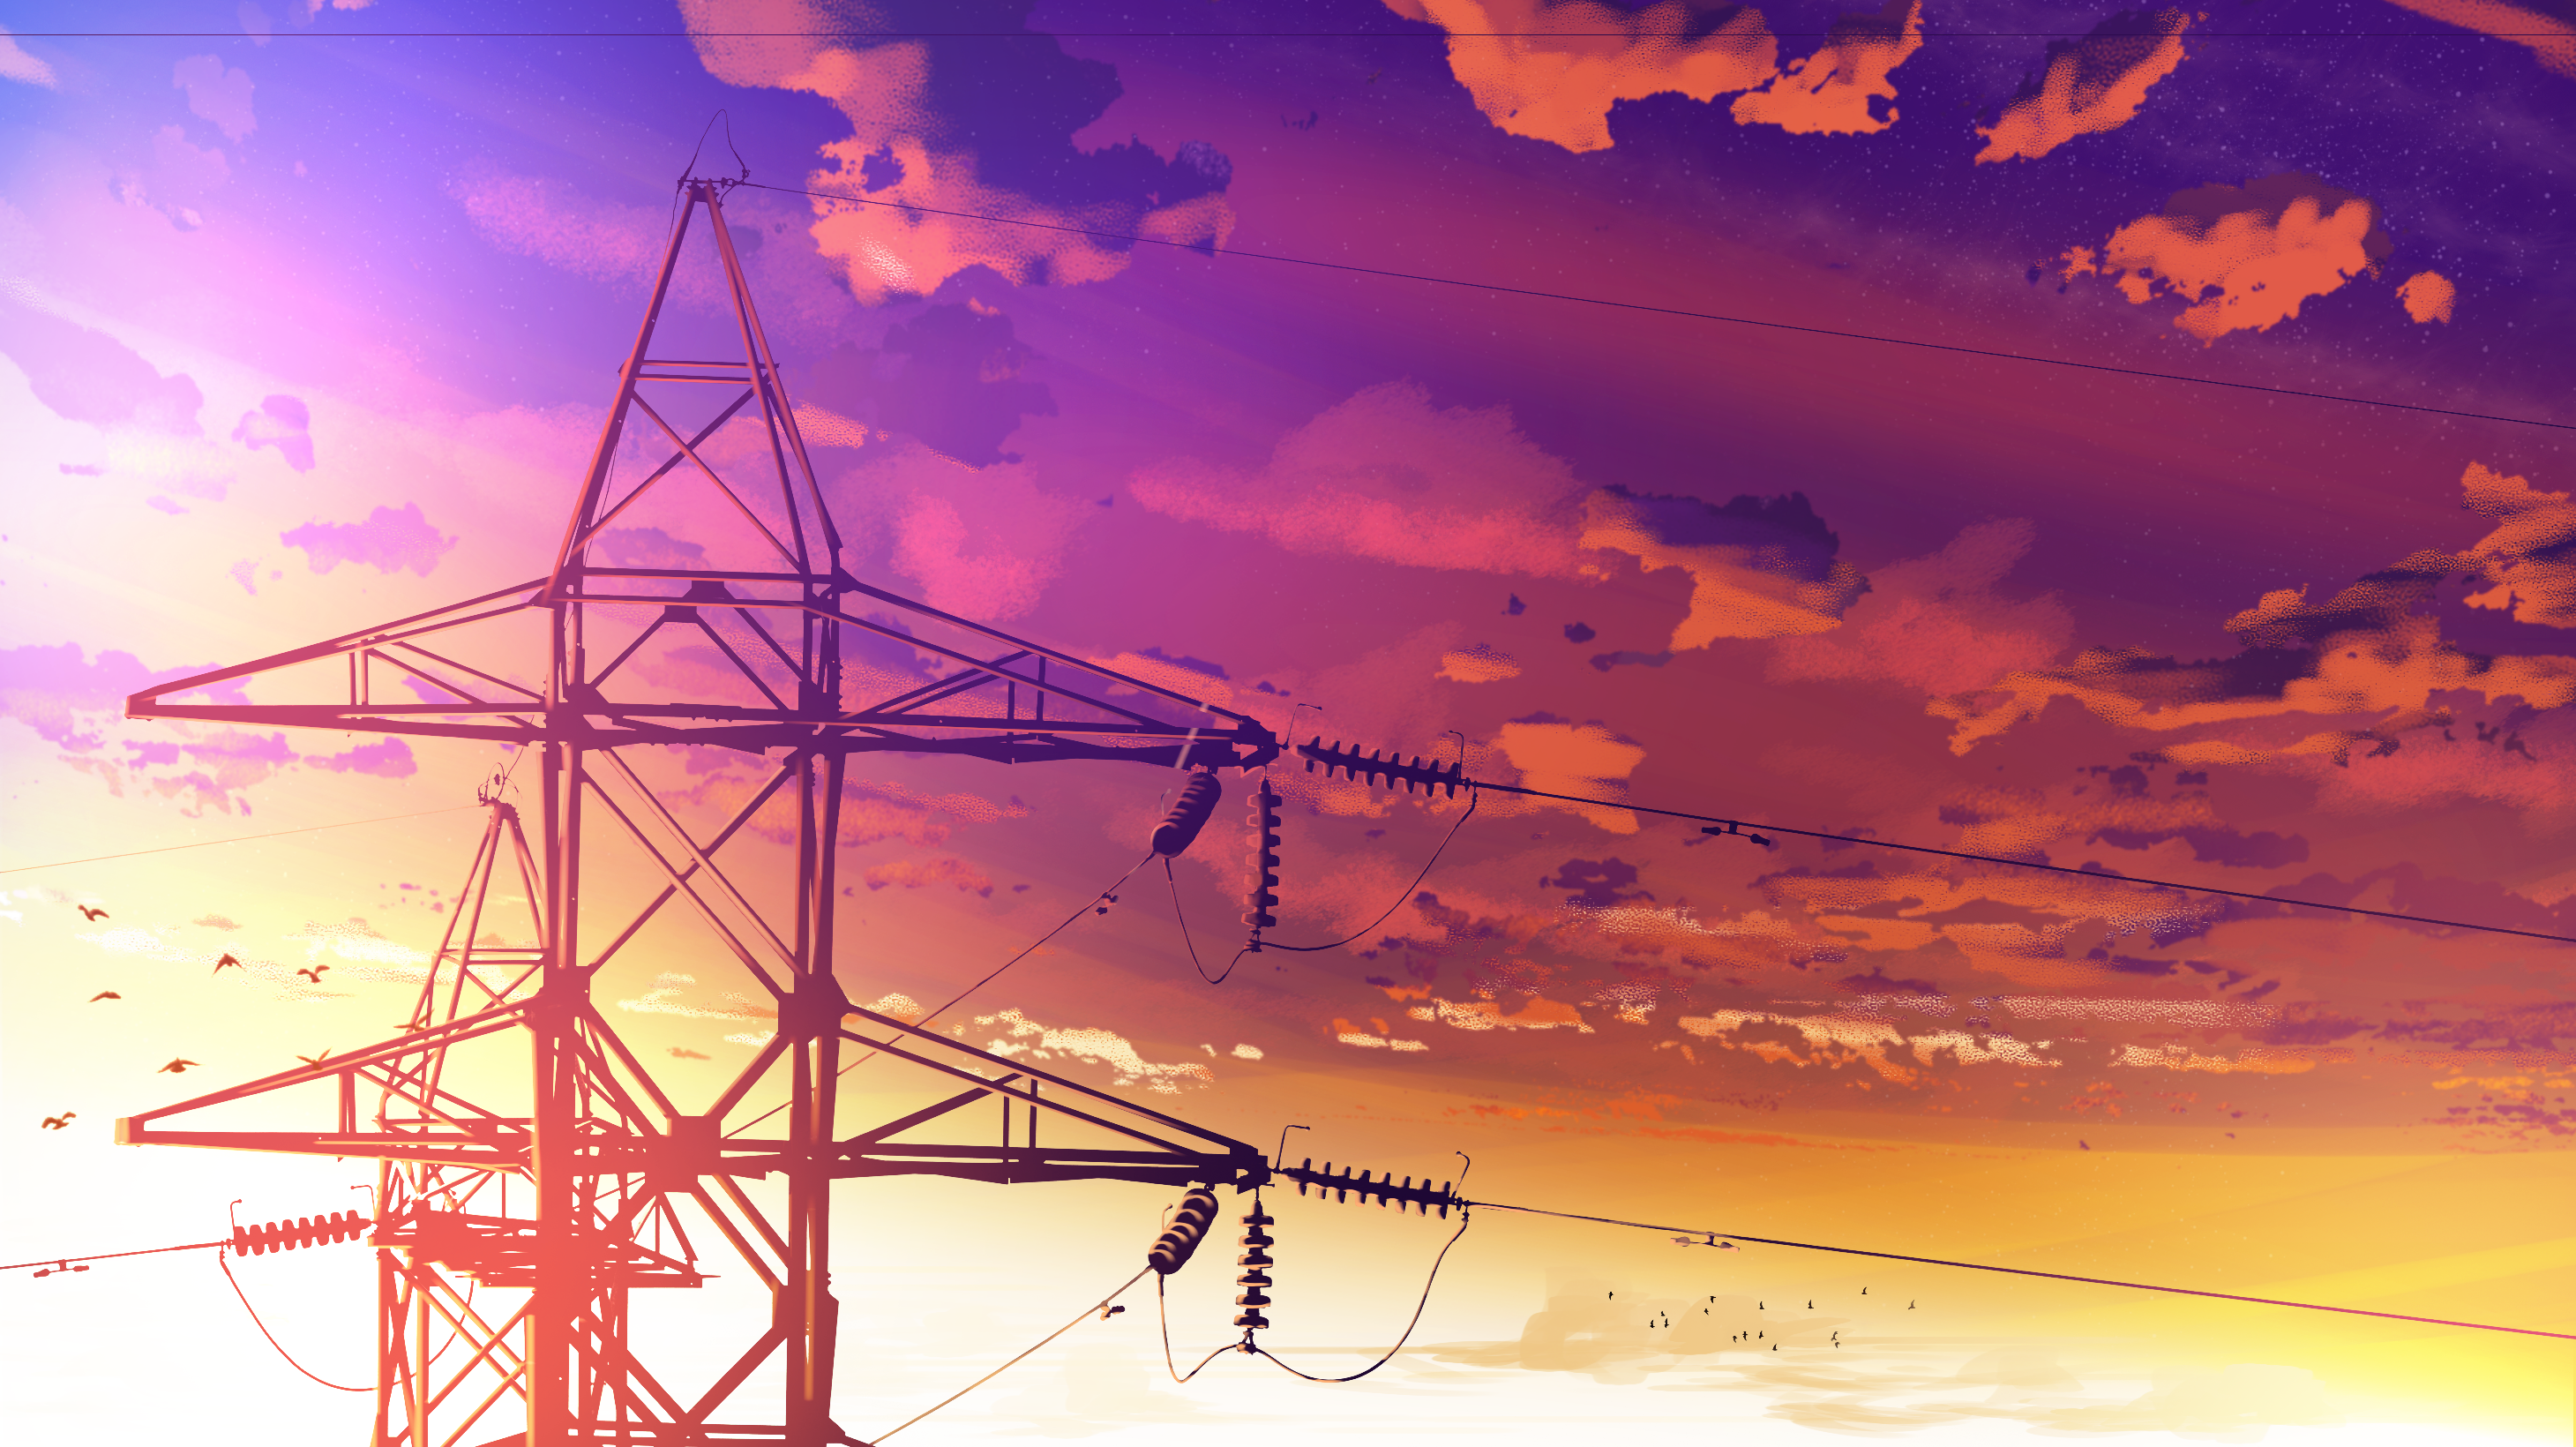 Made An Anime Style Sunset Wallpaper [2920x1640]. Sunset Wallpaper, Anime Scenery, Evening Sunset